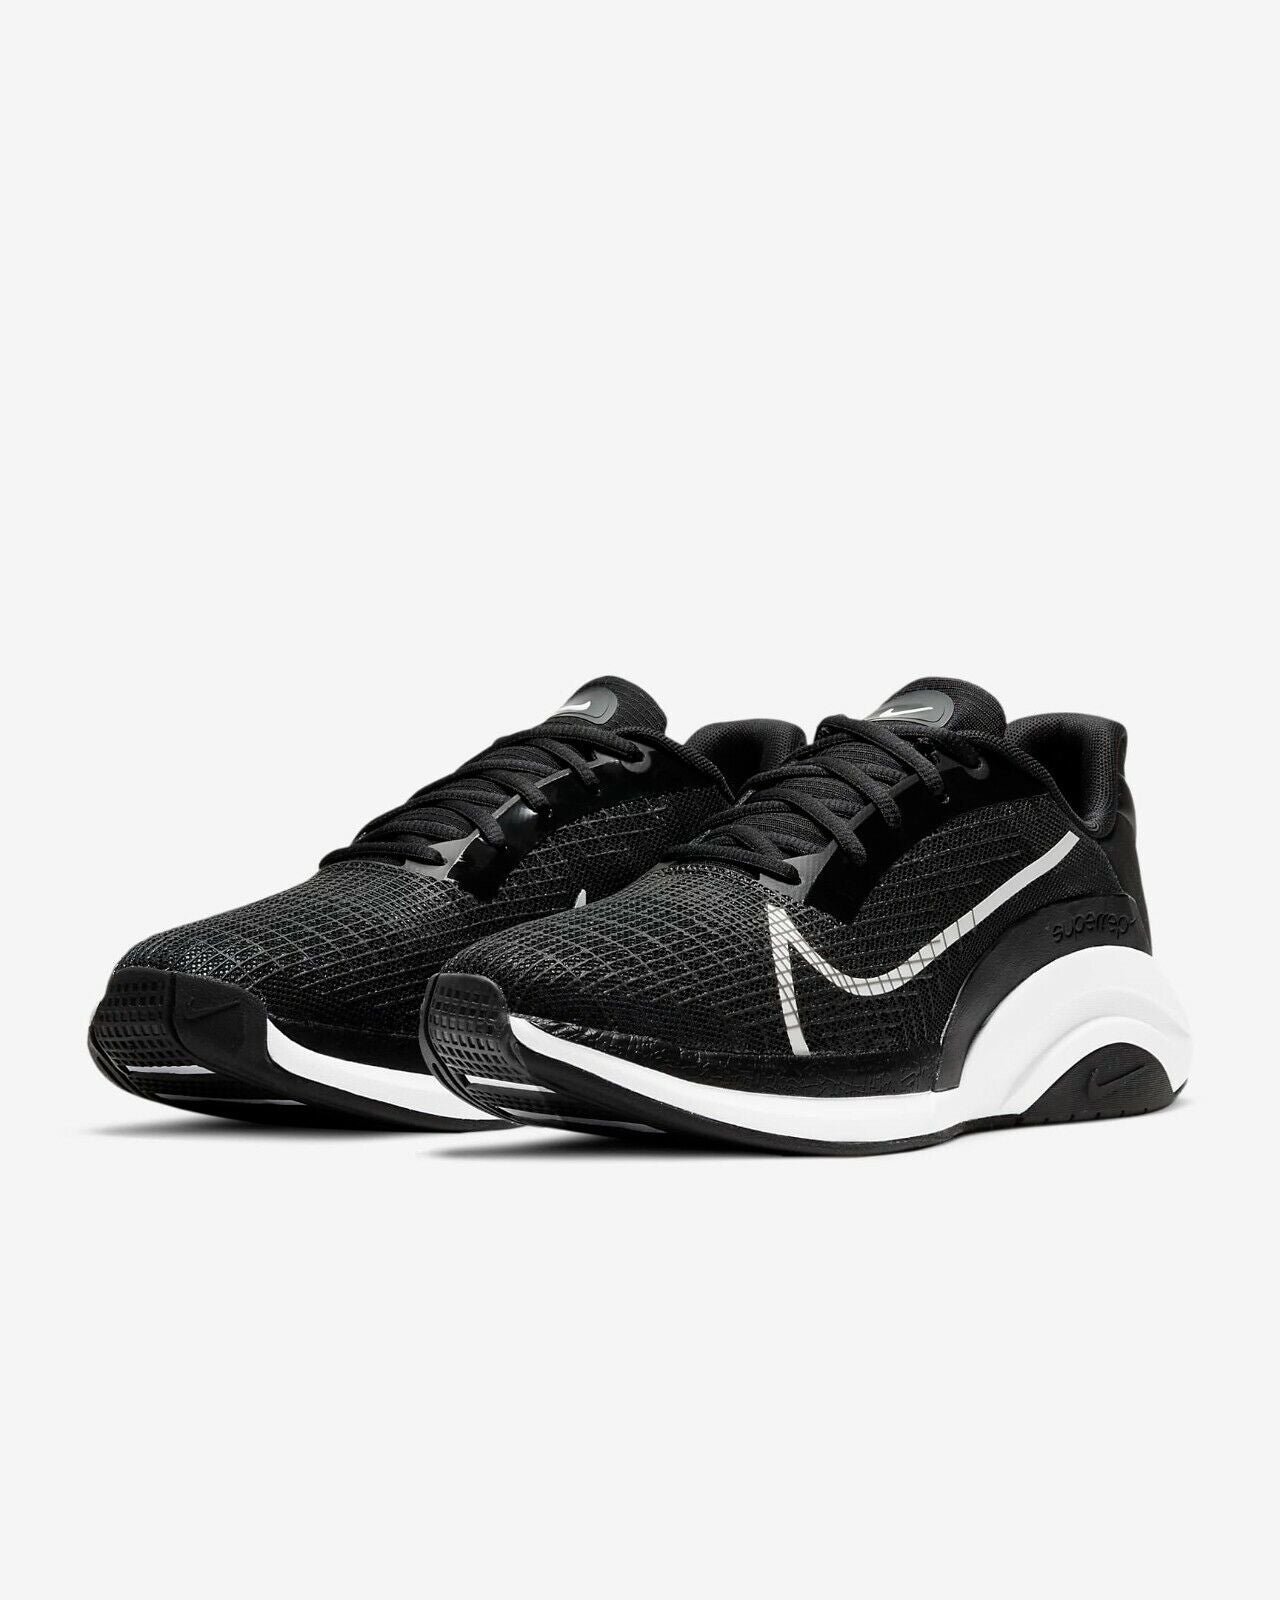 Men's Nike ZoomX SuperRep Surge Training Shoes, CU7627 002 Multi Sizes Black/Black/White